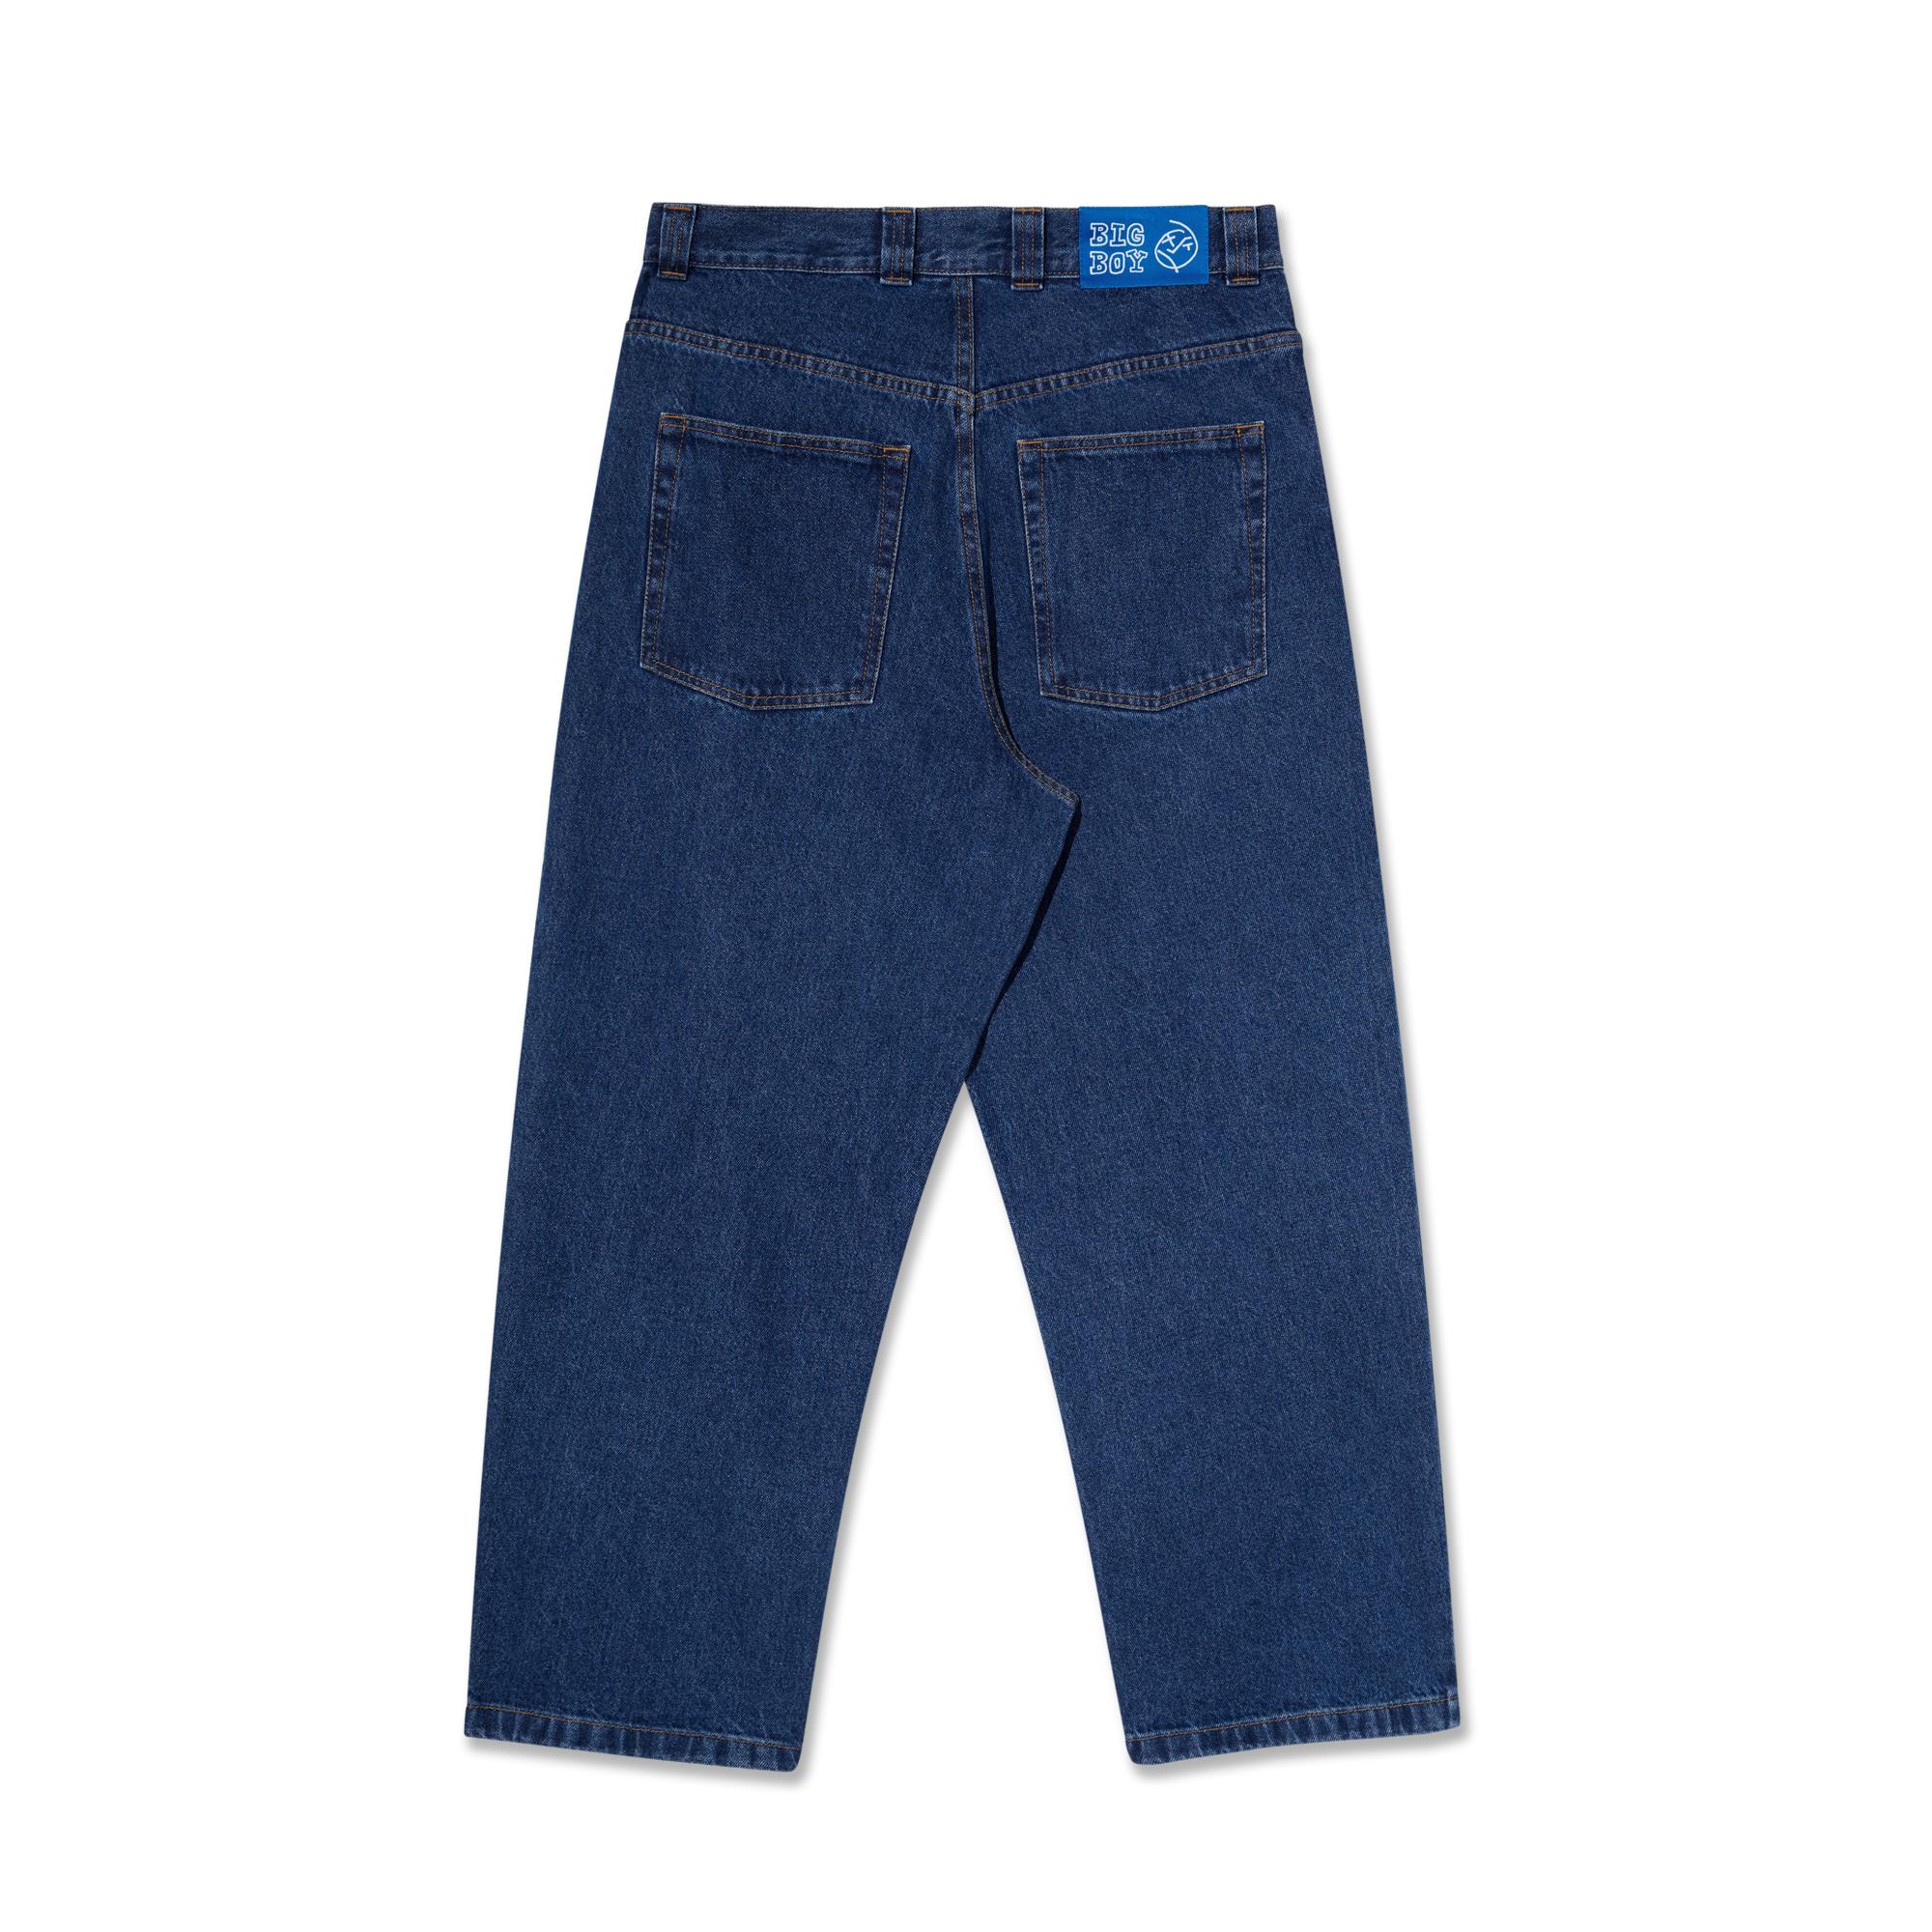 Men's Black Blue Denim Jeans Straight Leg Ripped Holes Embroidery Pants  Trousers | eBay